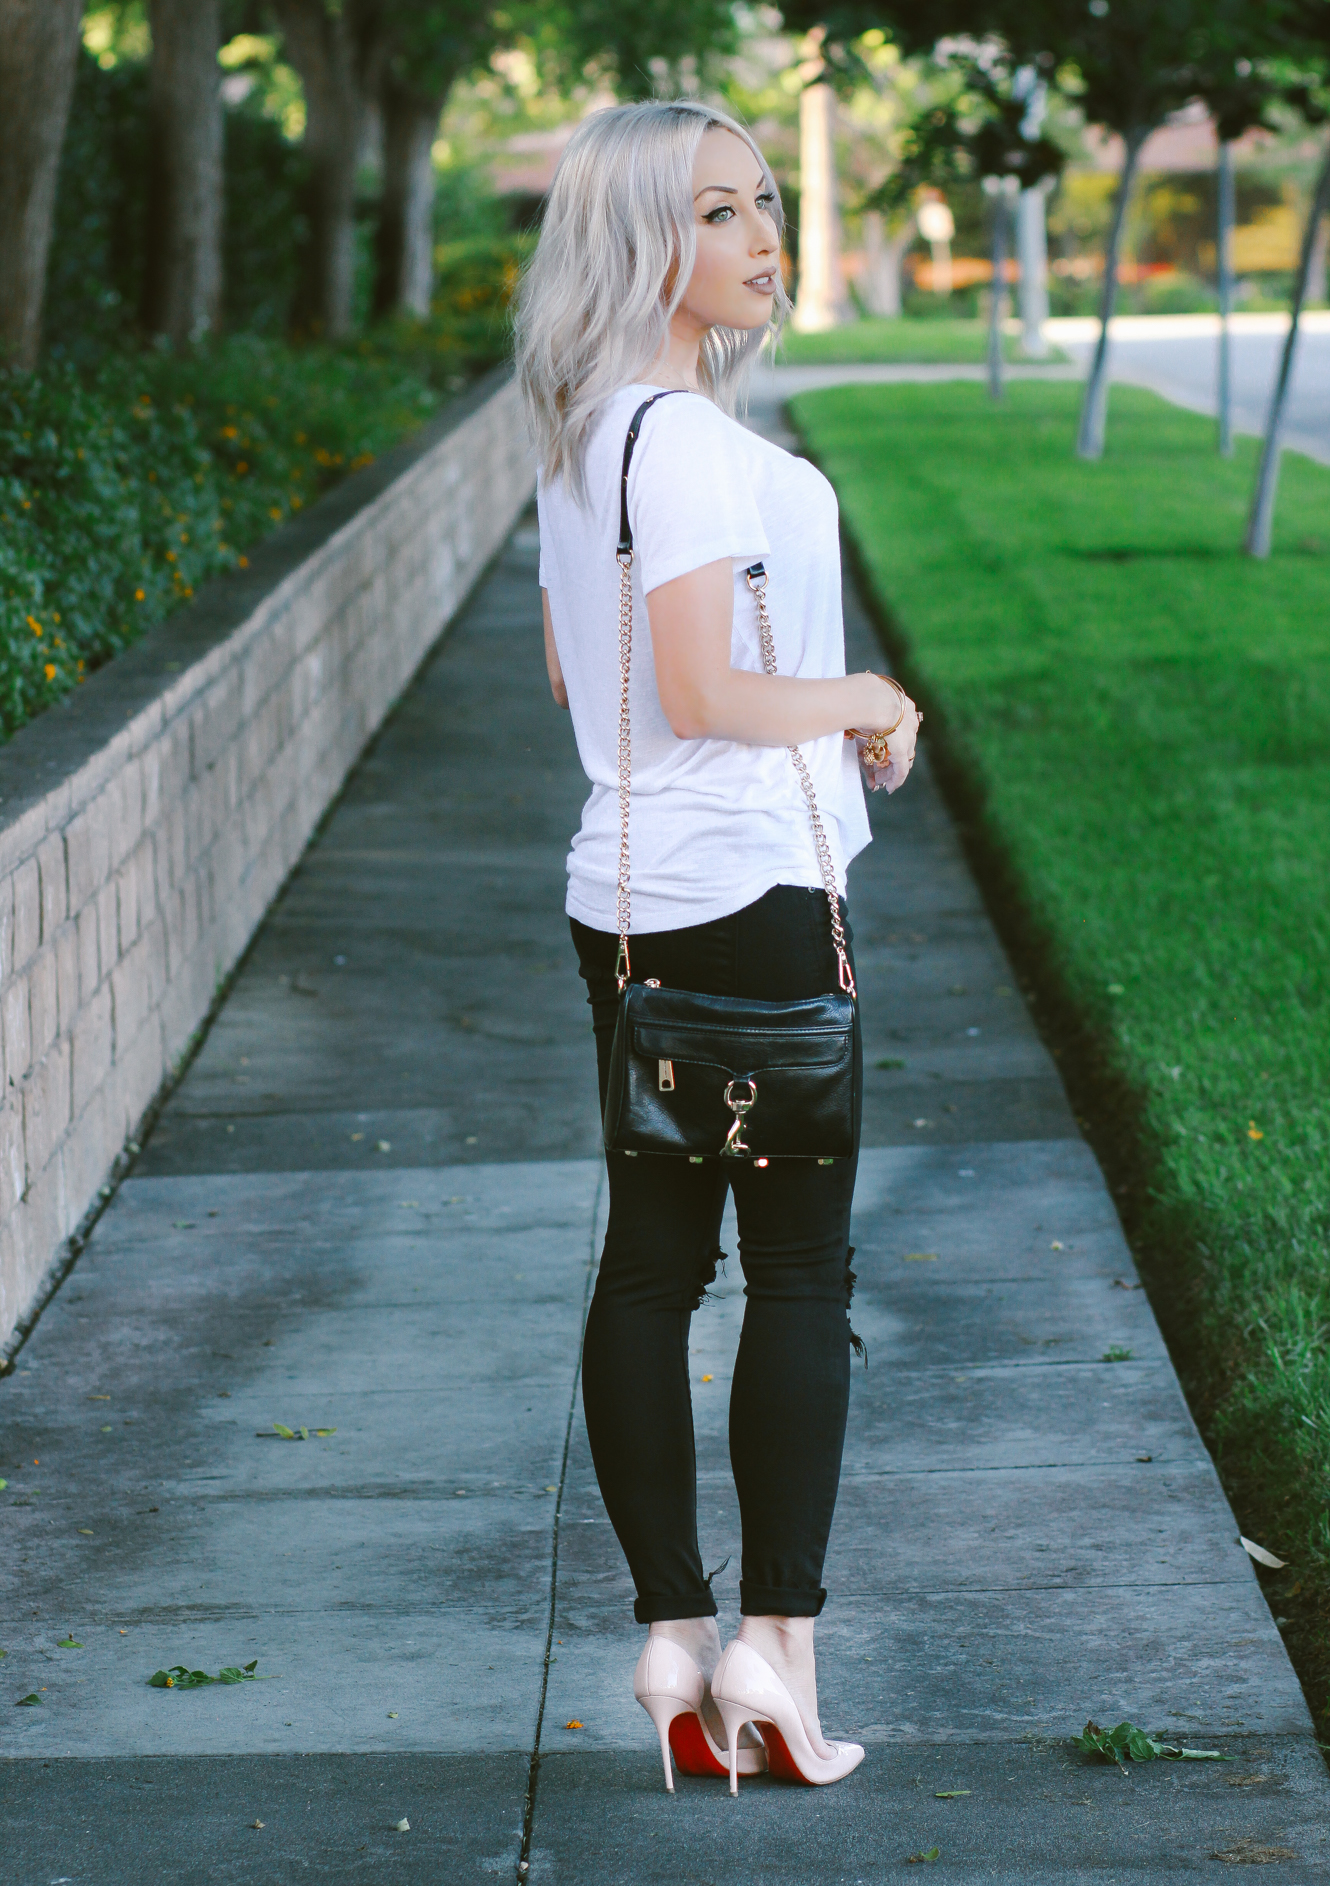 Blondie in the City | Black Skinny Jeans, Basic White Tee, Christian Louboutin's, Rebecca Minkoff Bag | Street Style #OOTD